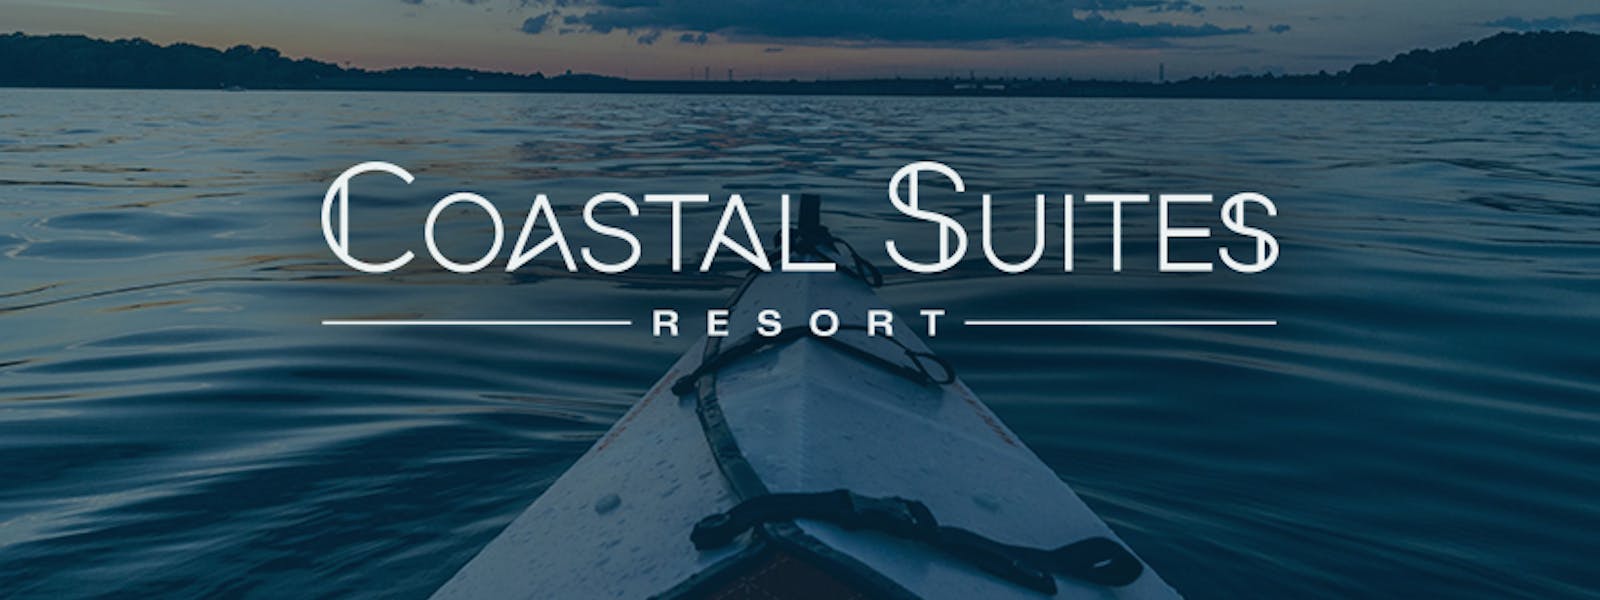 Coastal Suites Resort Beulah Michigan